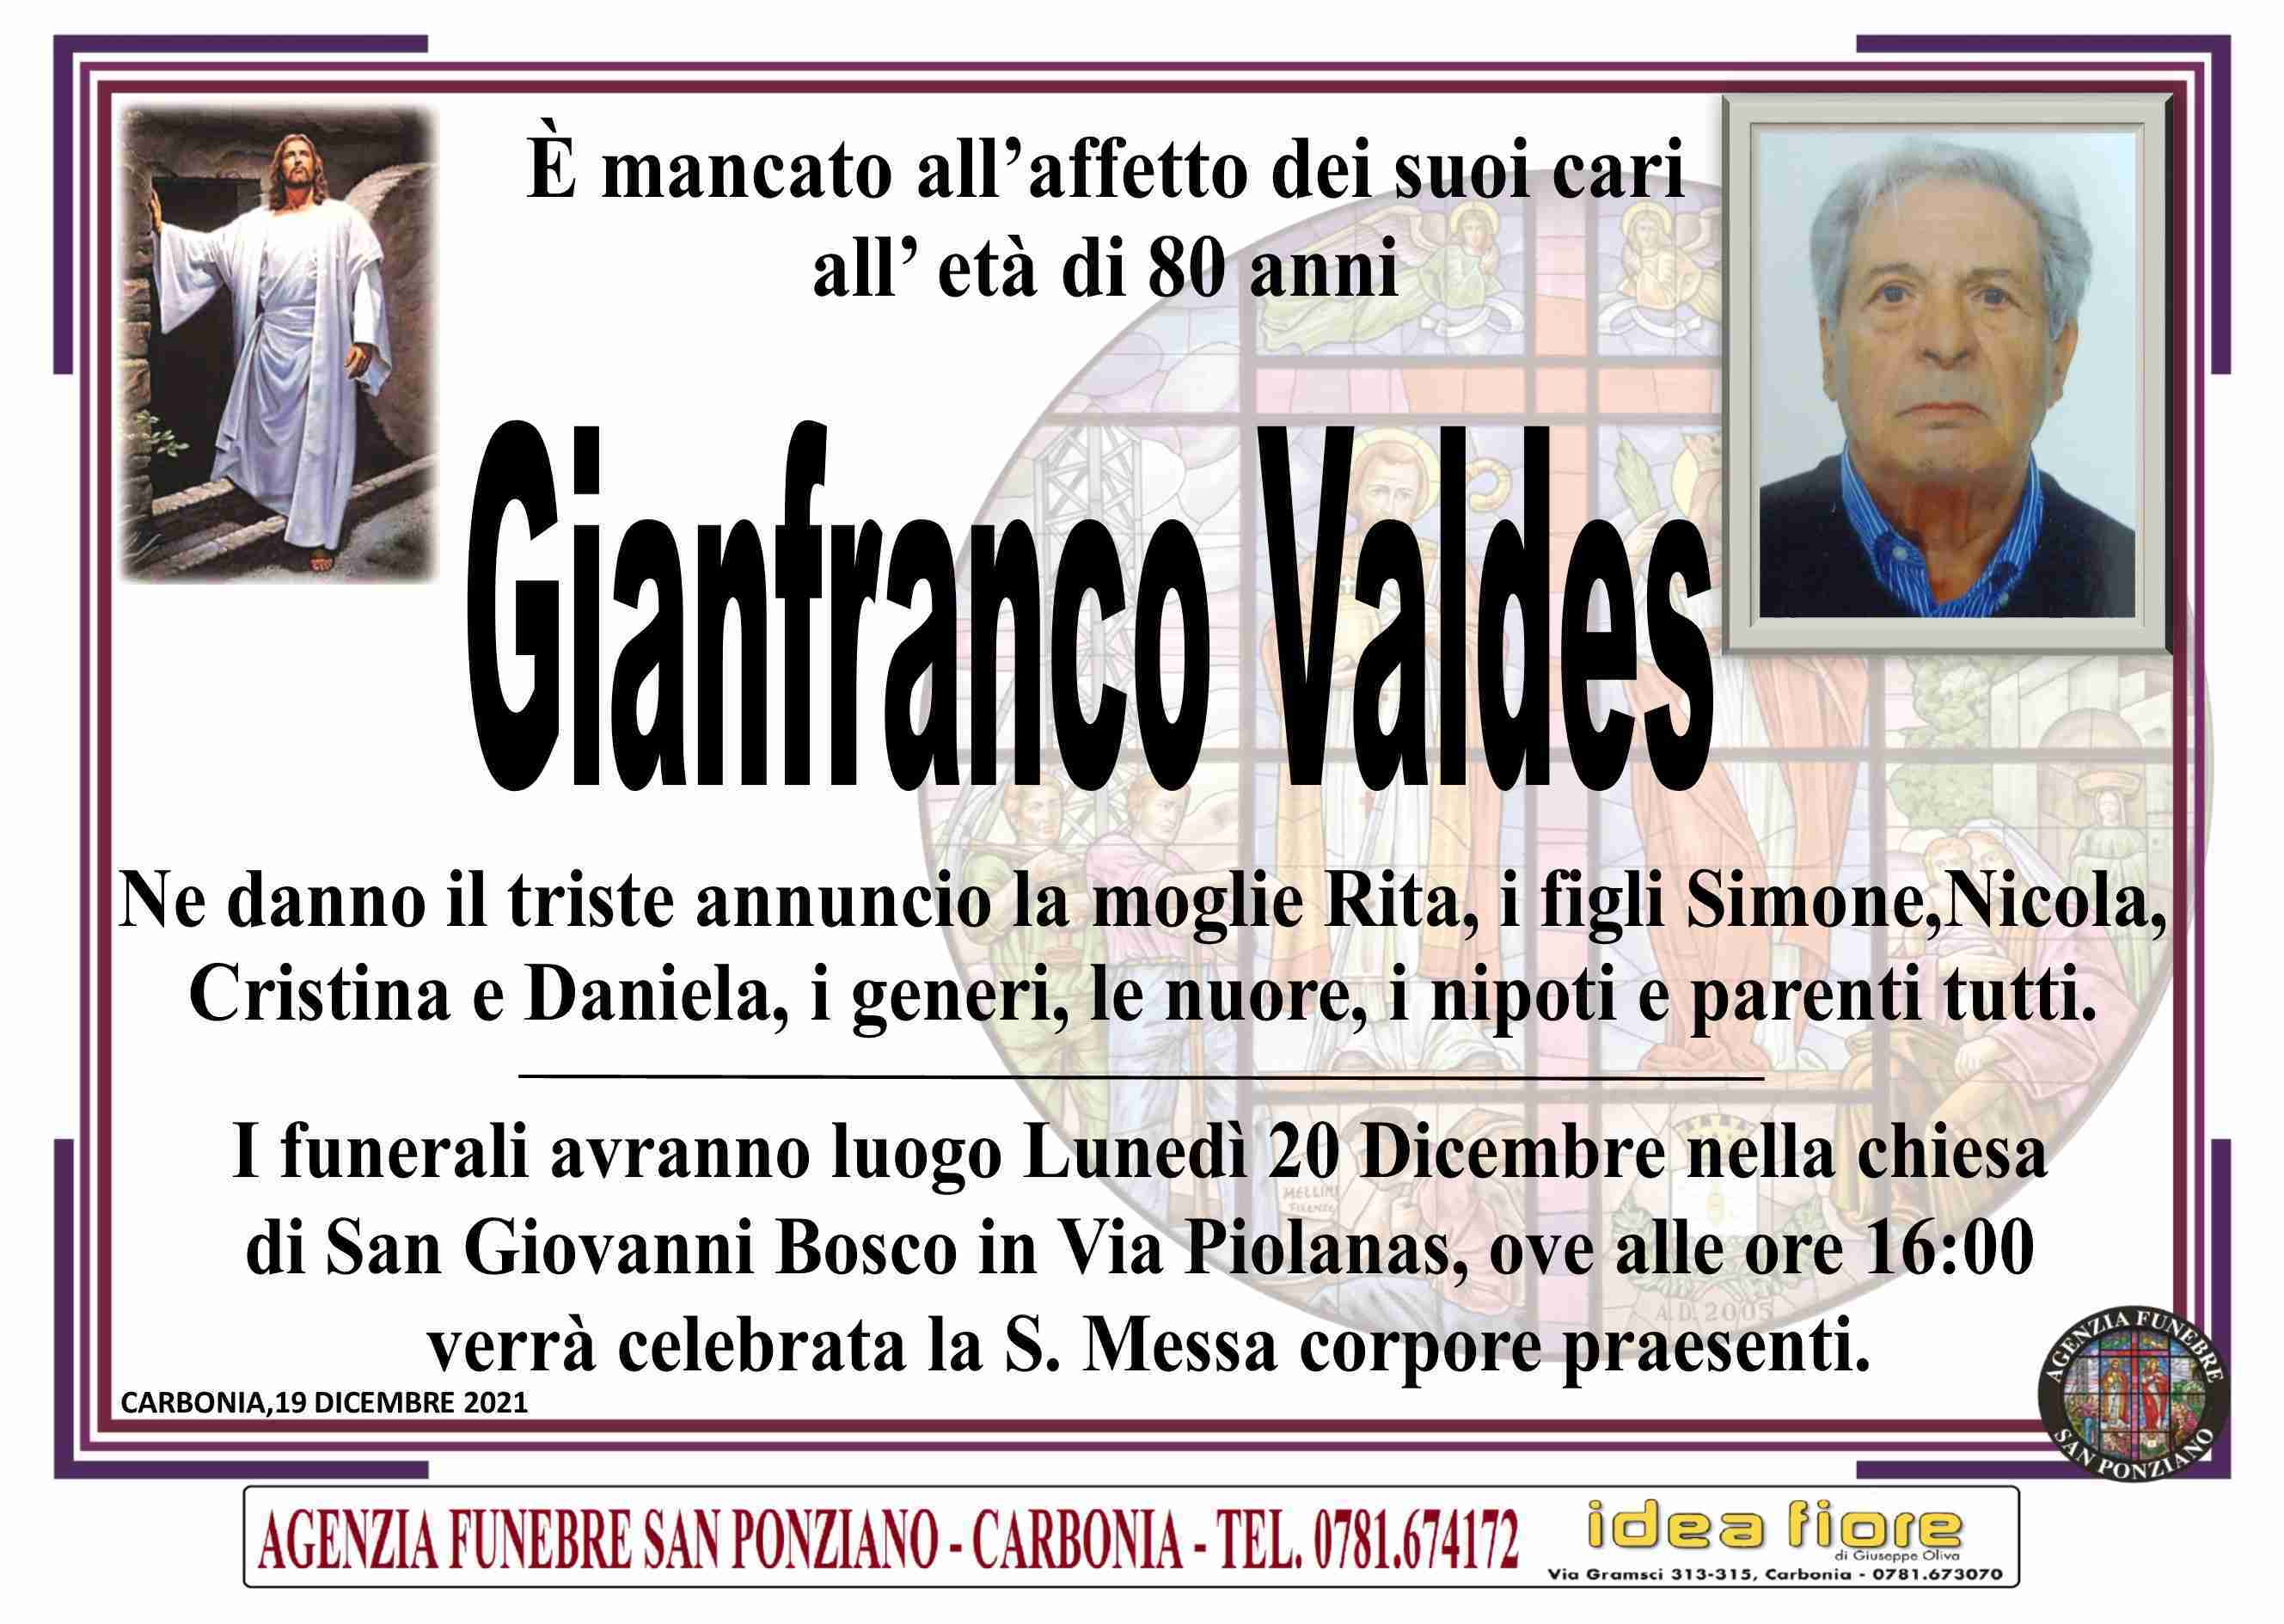 Gianfranco Valdes